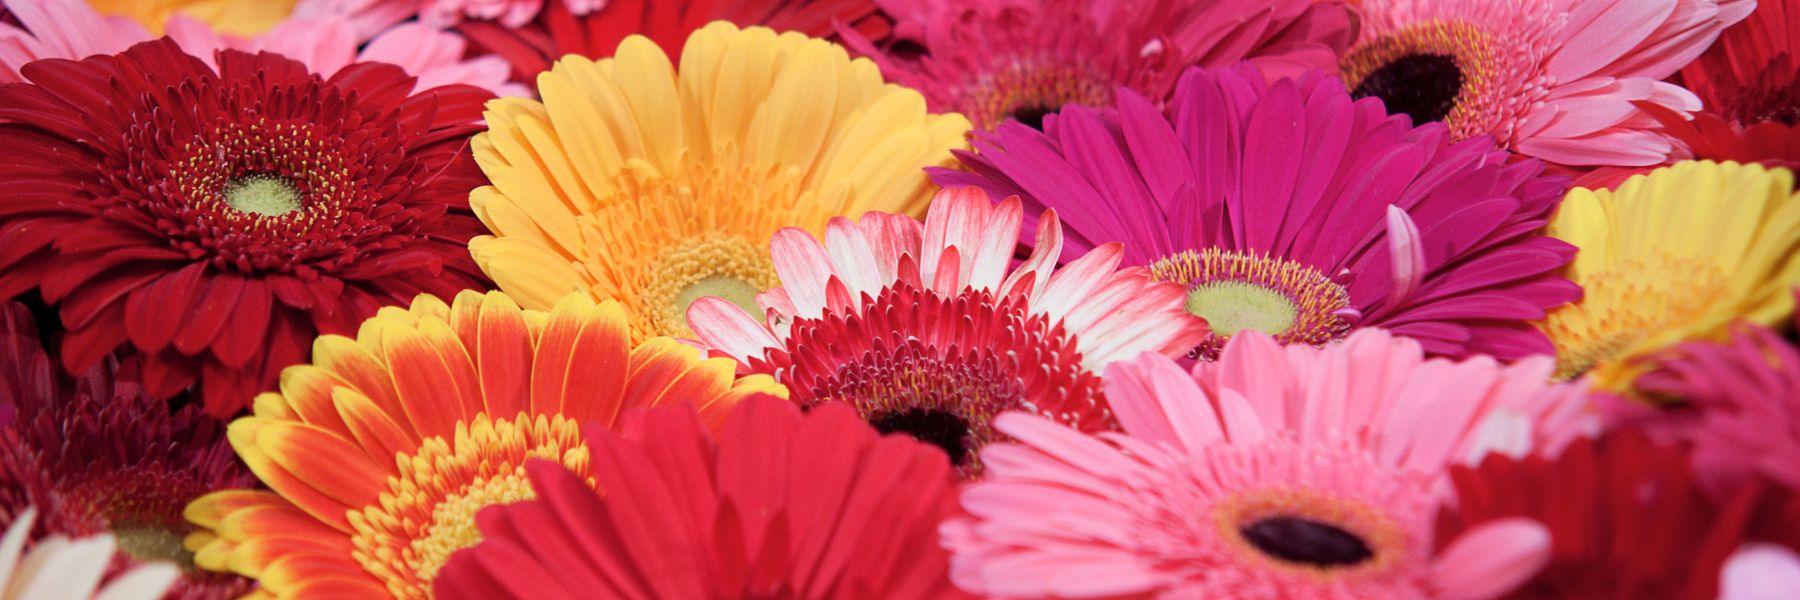 Gerbera Daisy: The Vibrant Blossom of Joy - Fabulous Flowers